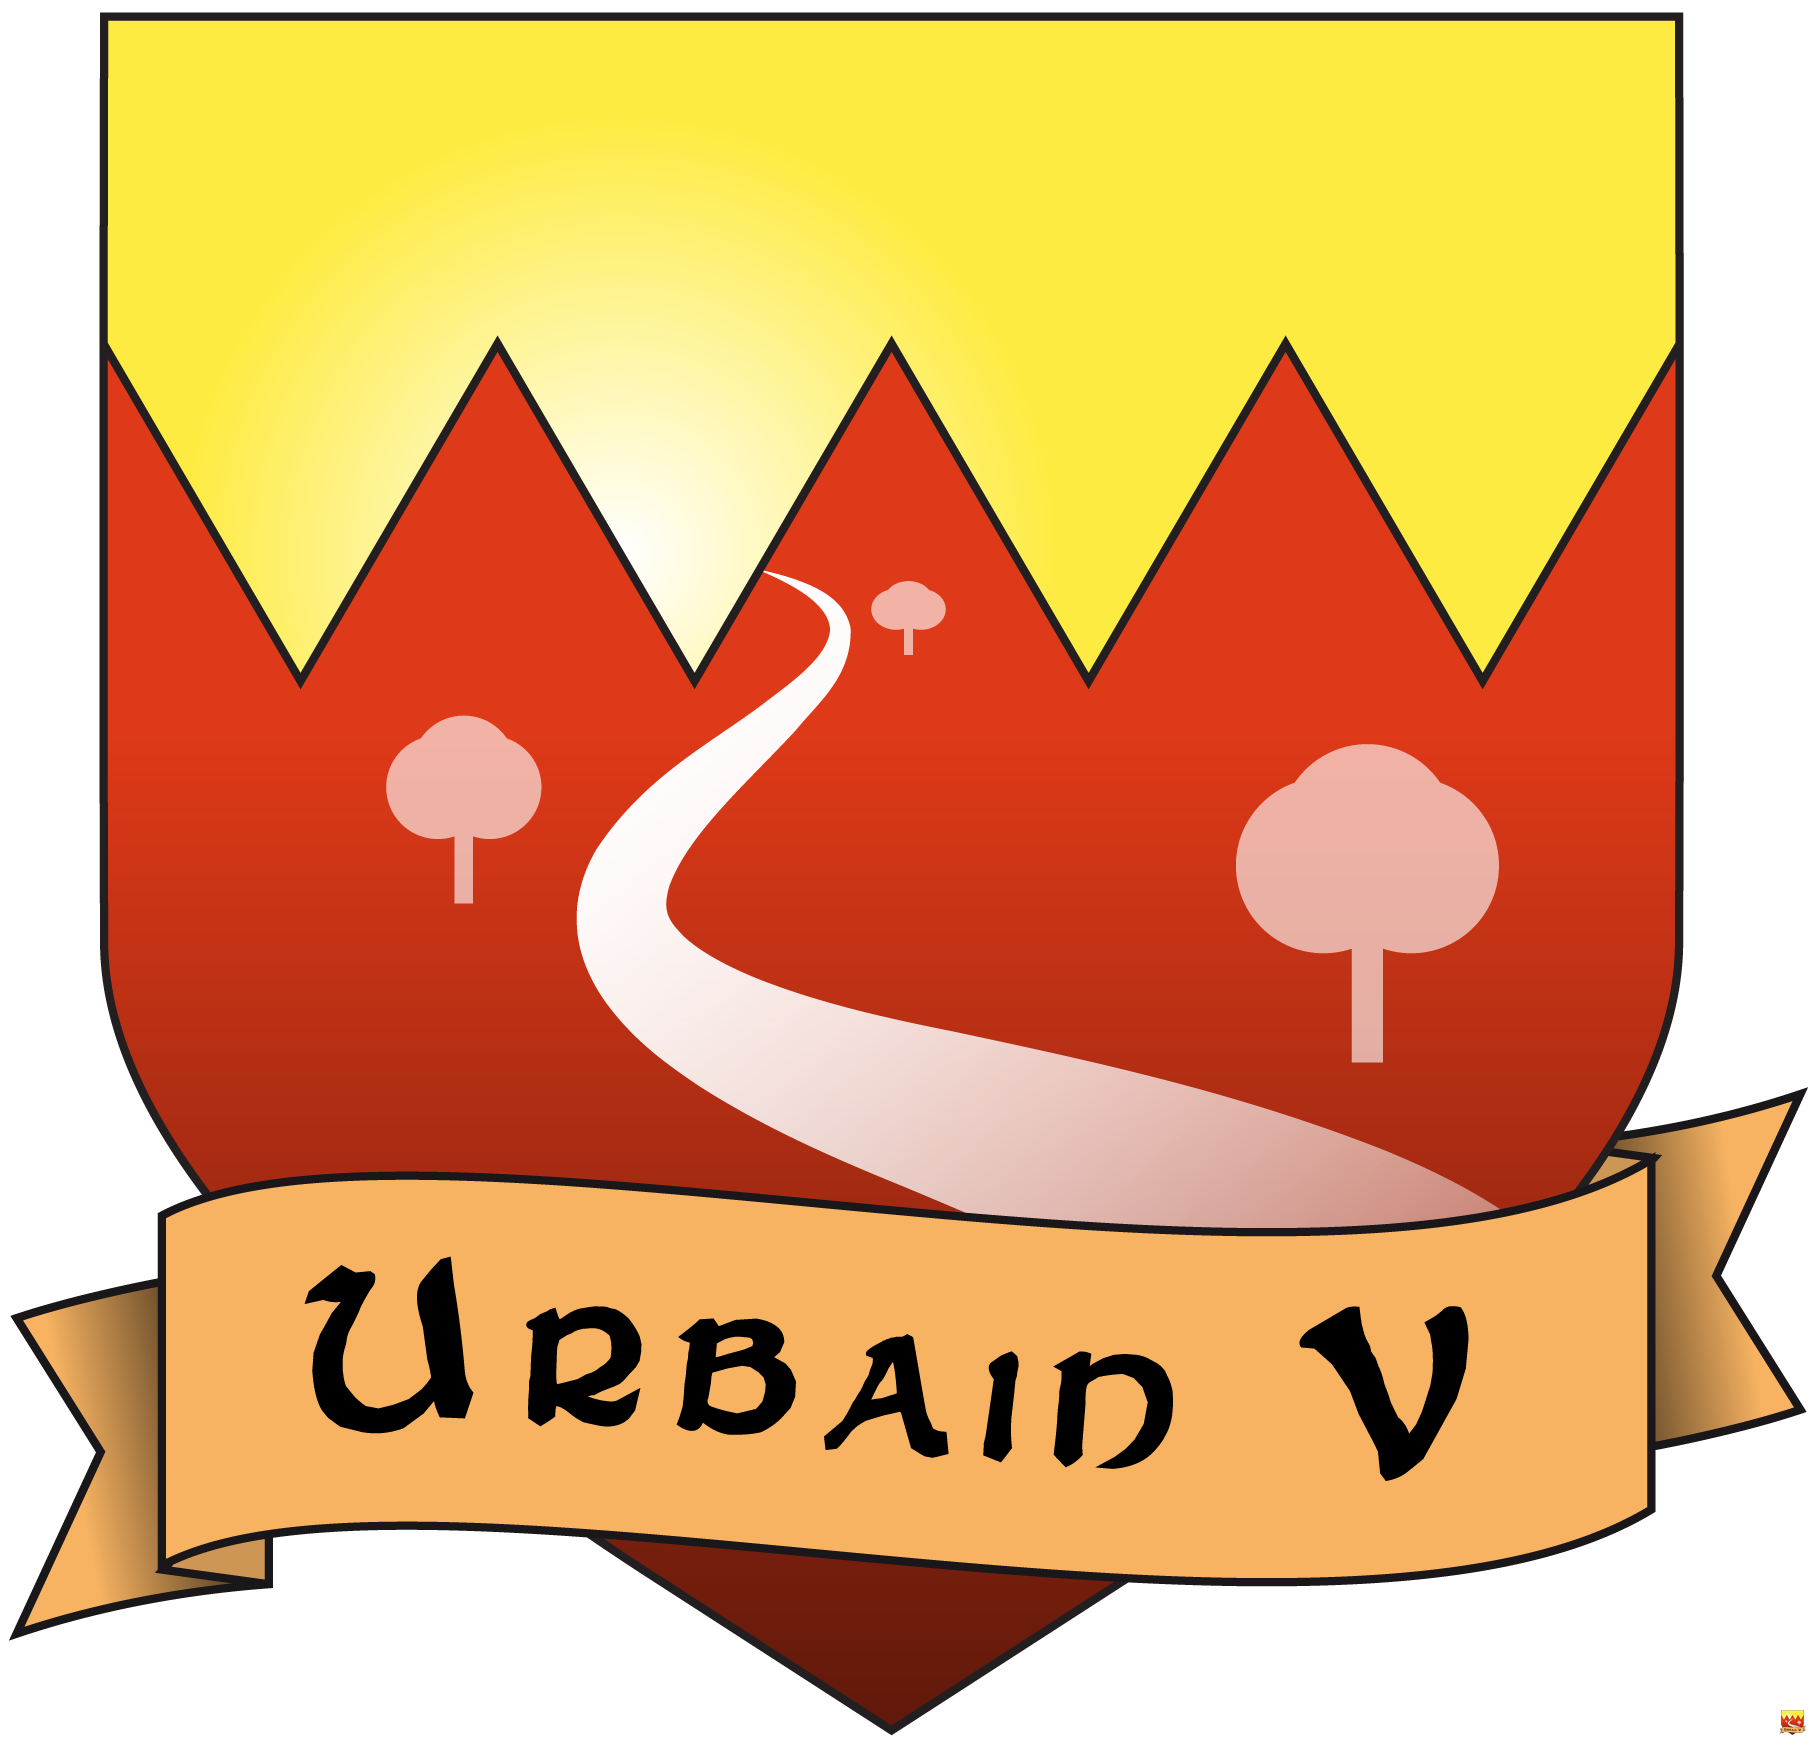 Logo-UrbainV